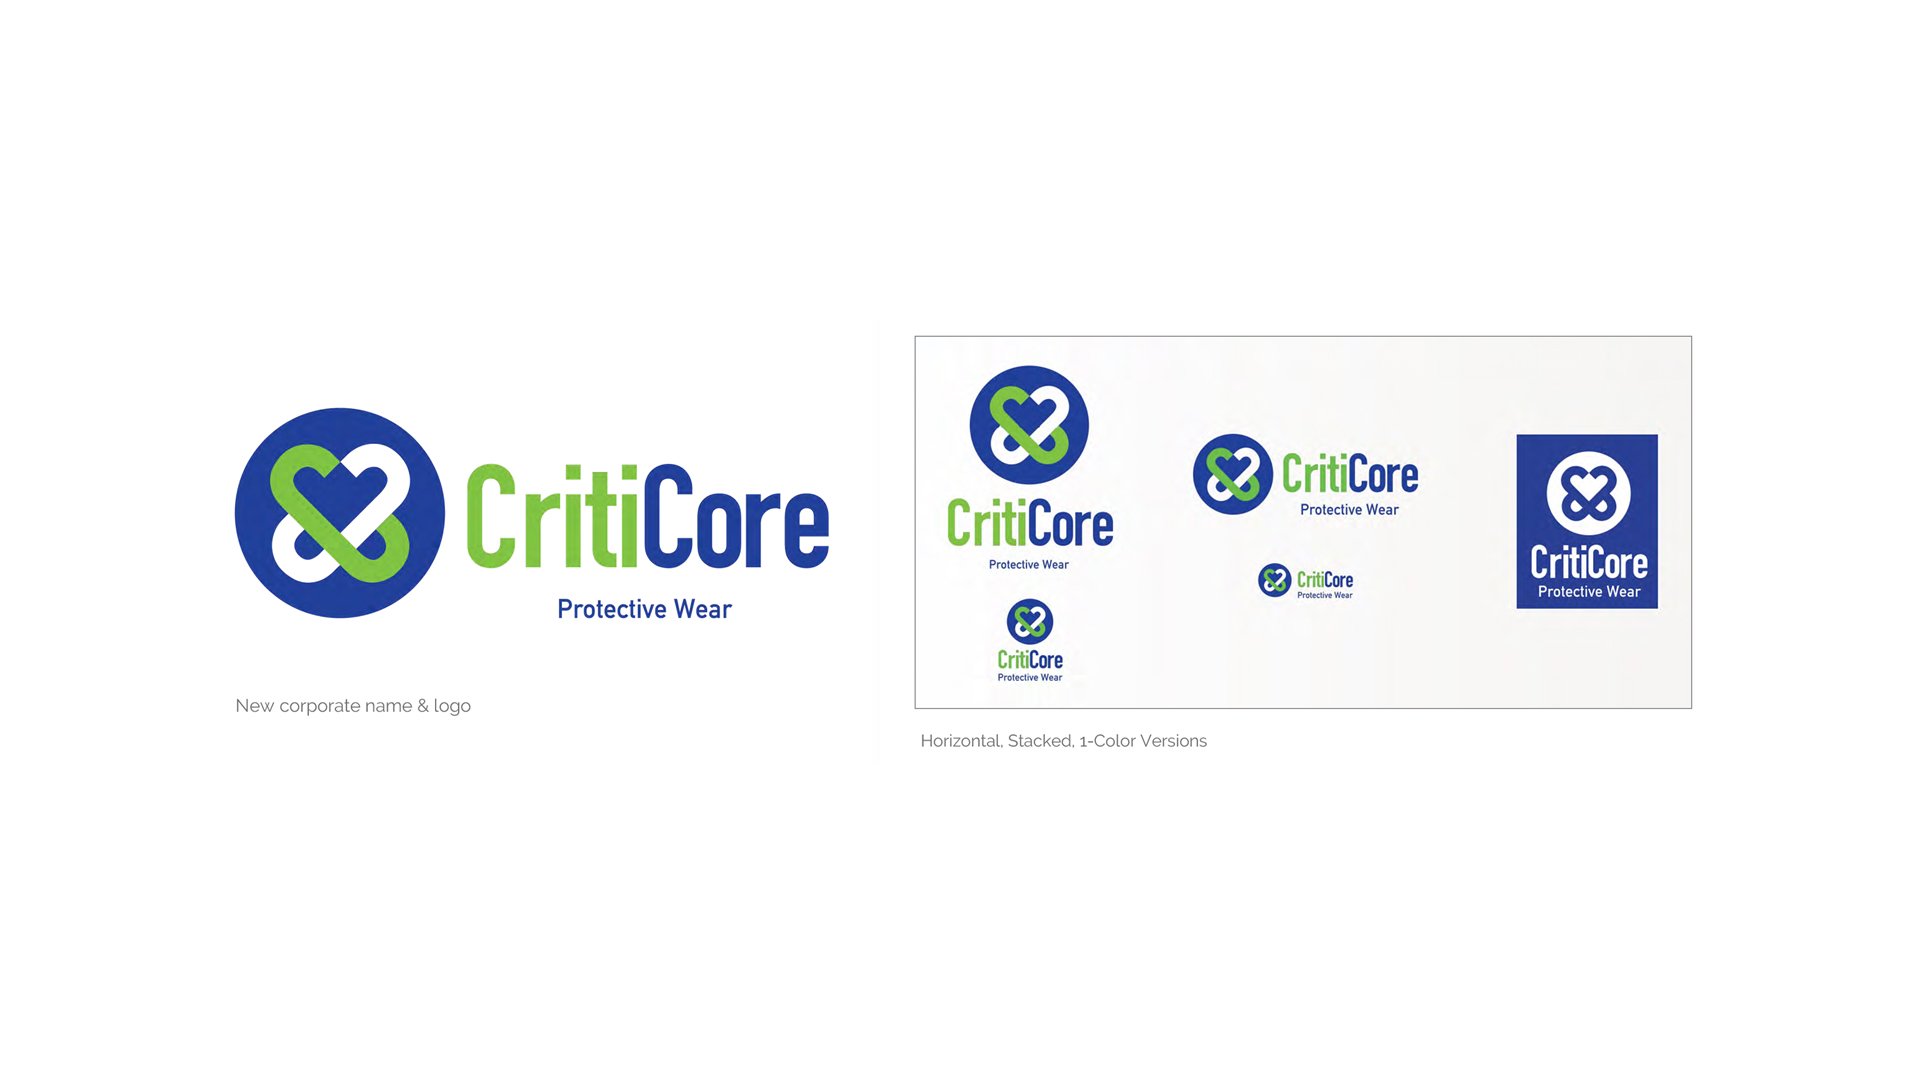 CritiCore_logos.jpg